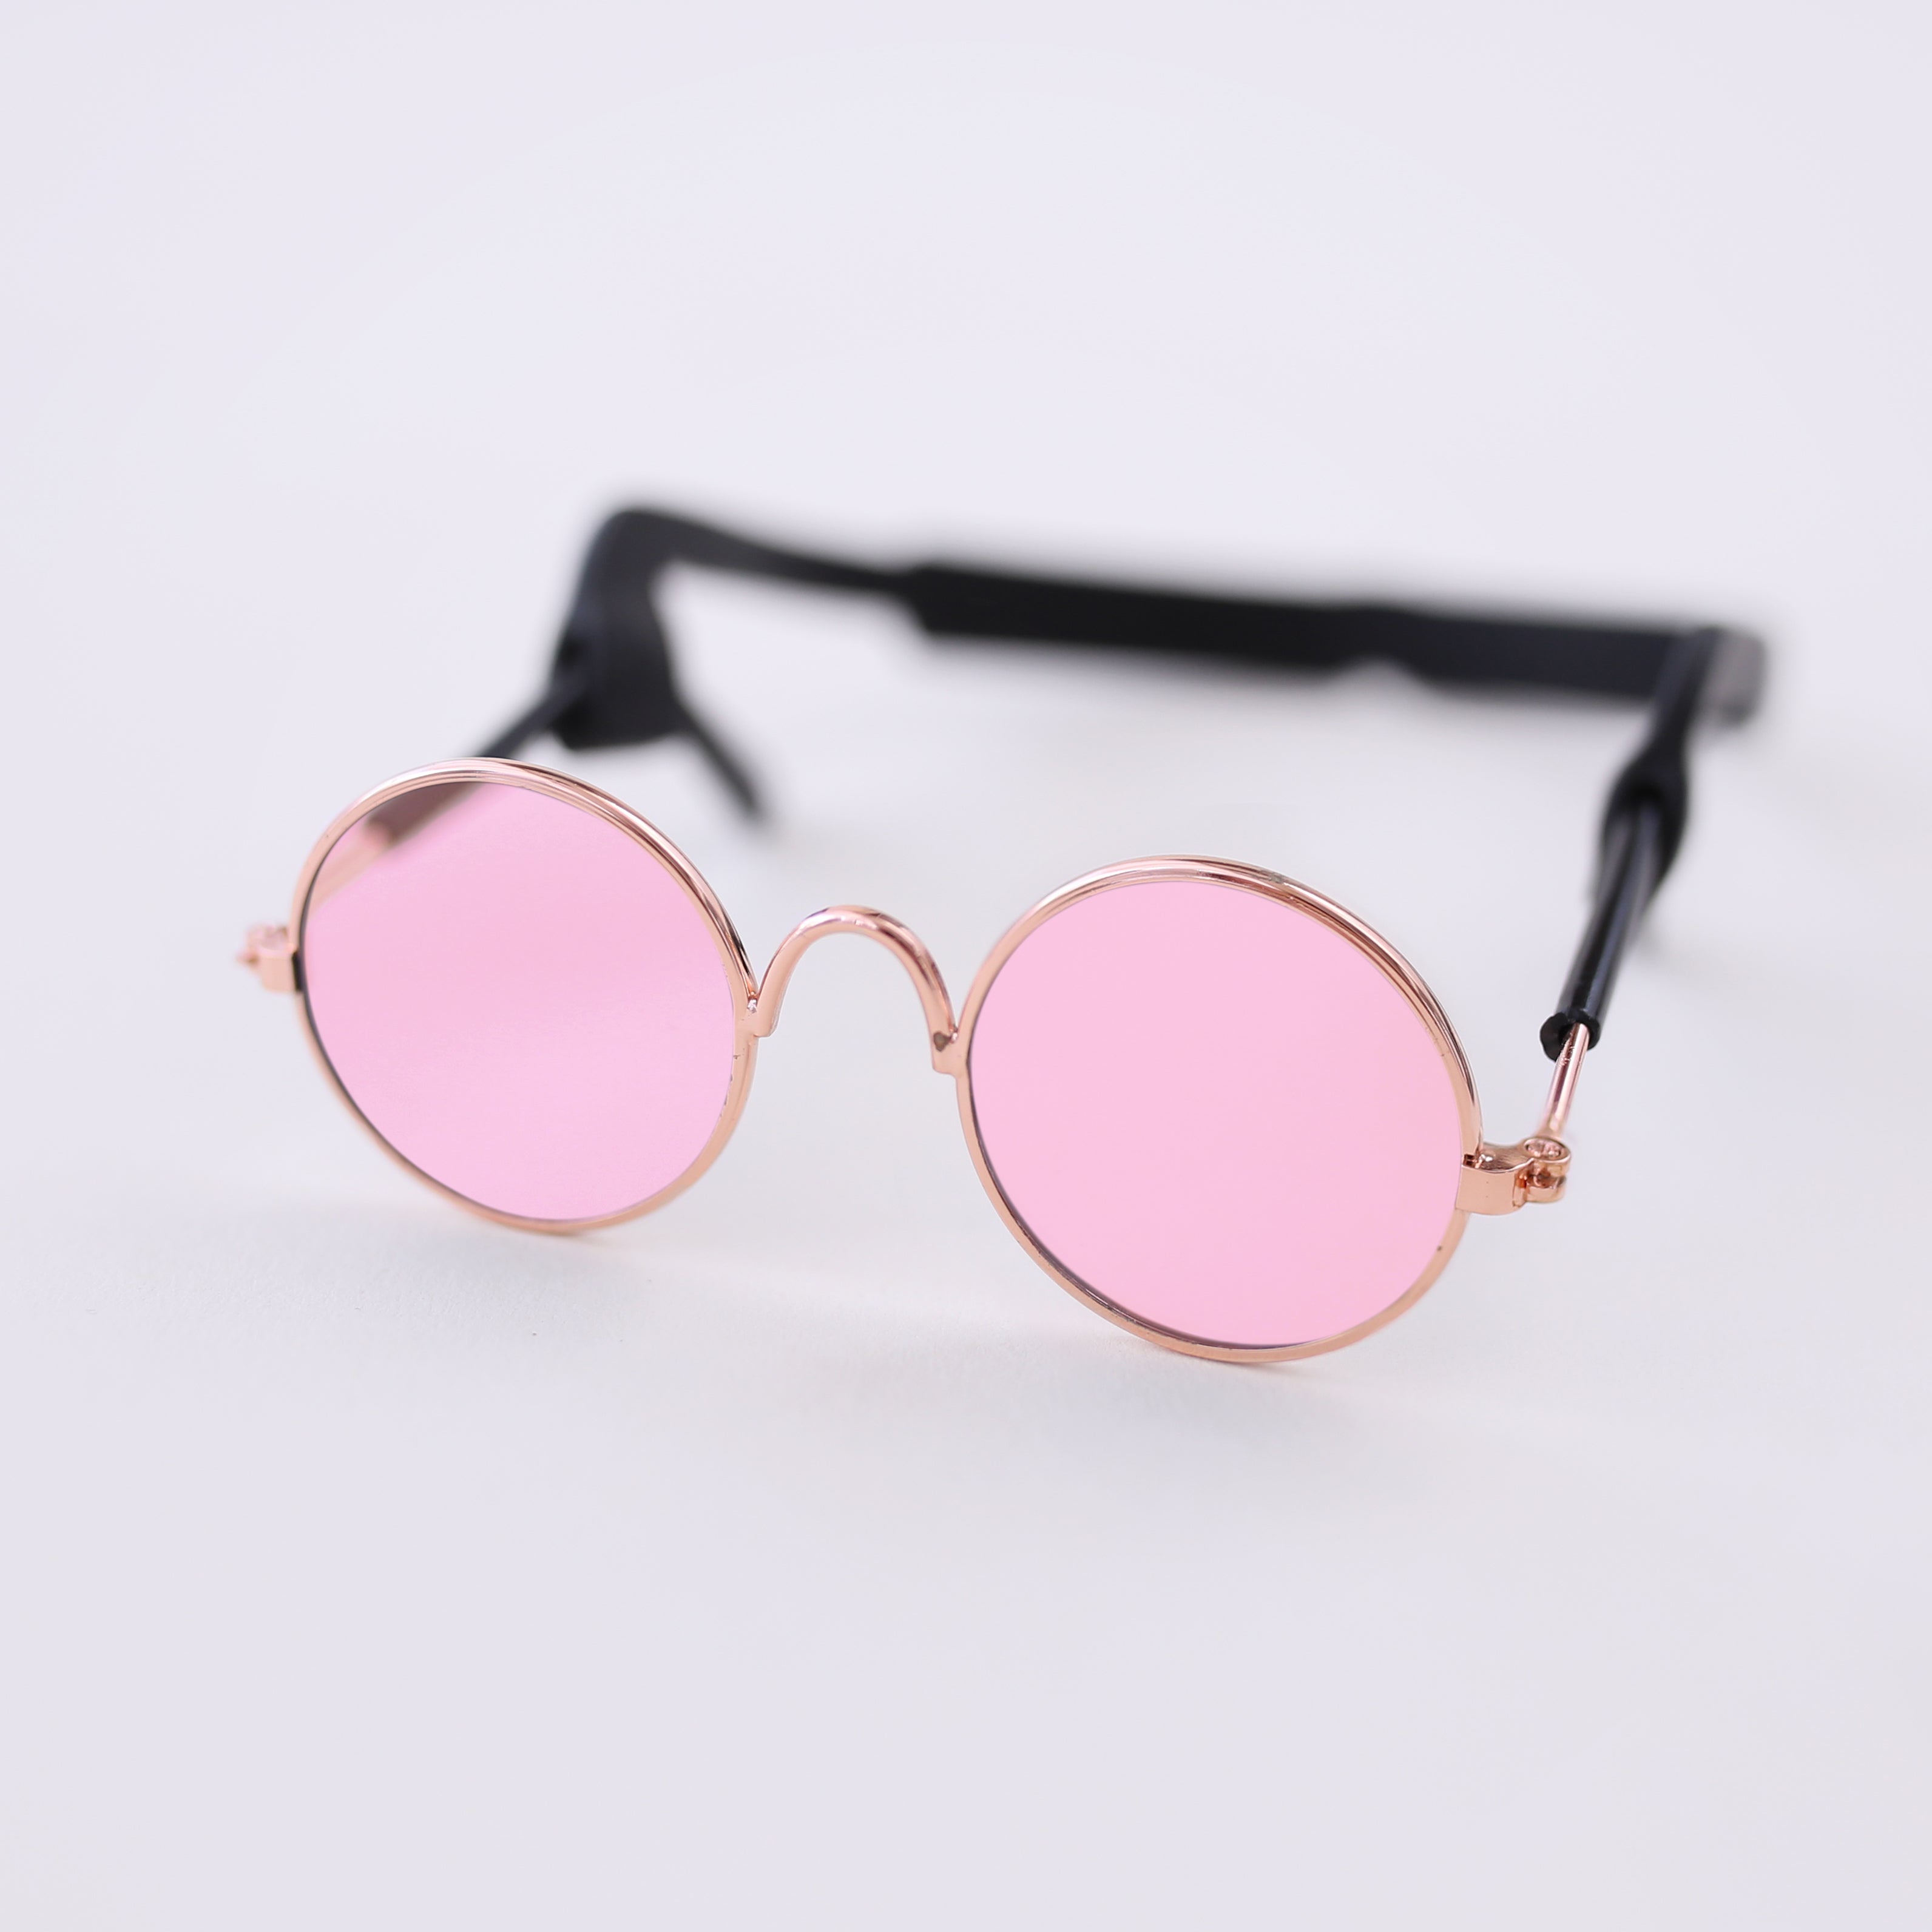 Dog eyewear - Pink Round Dog Sunglasses, Pink Teacup Dog Glasses